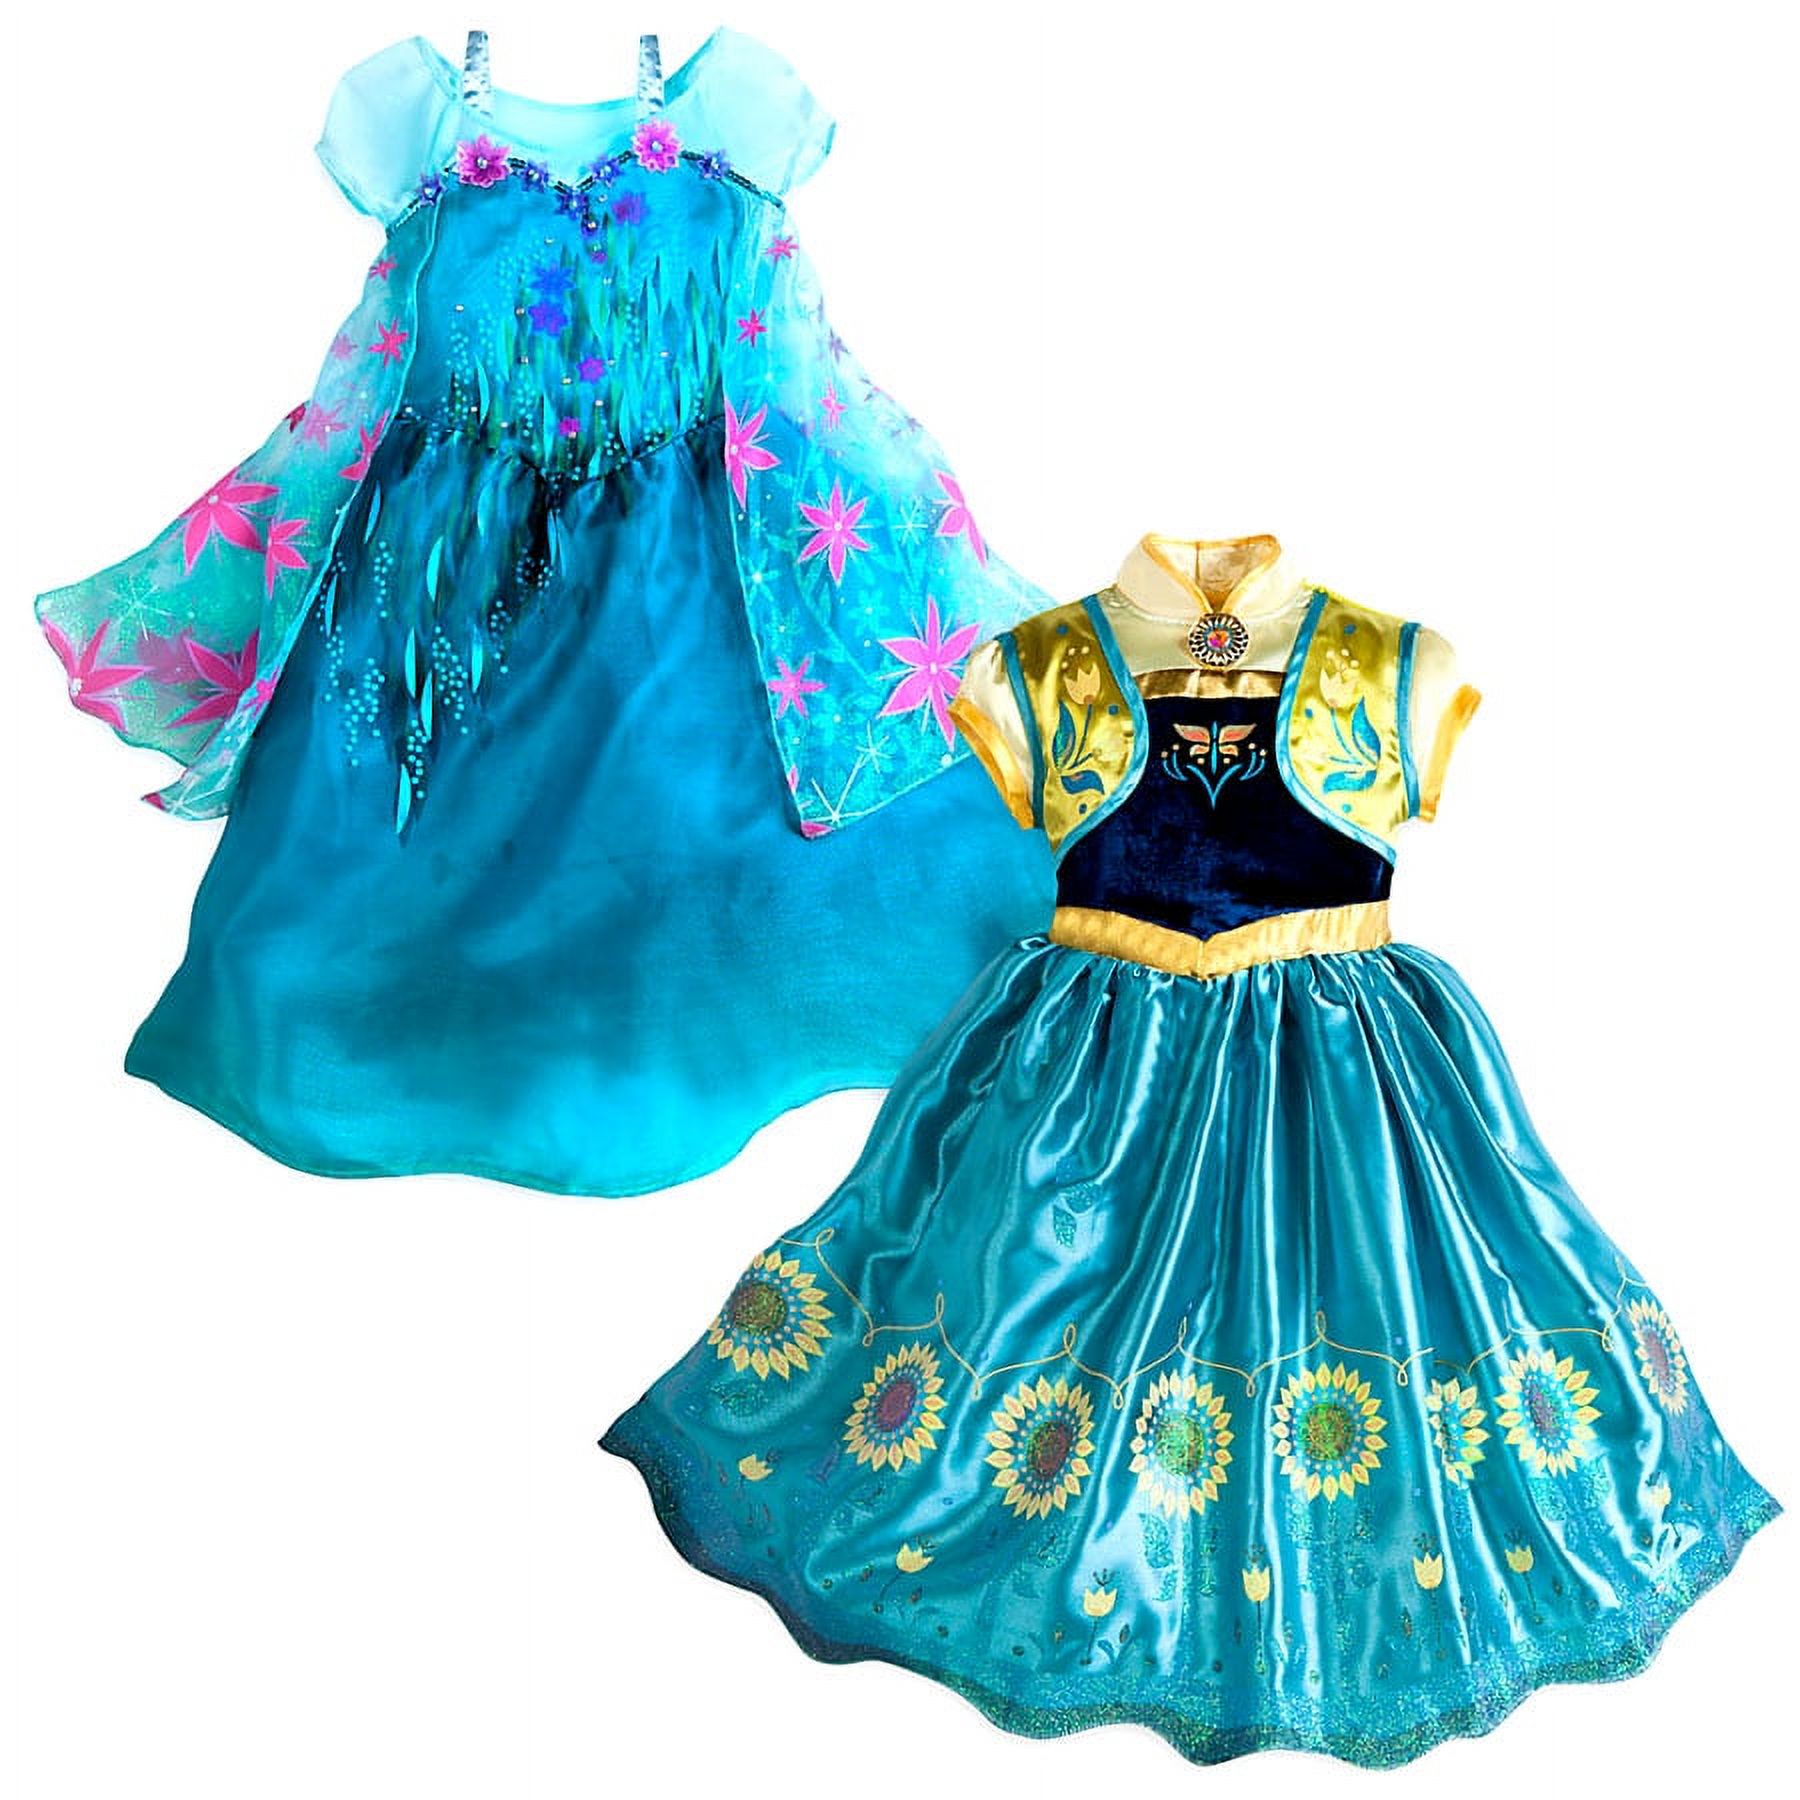 Disney Frozen Frozen Fever 2 in 1 Costume Set [Size 5/6] - image 1 of 1